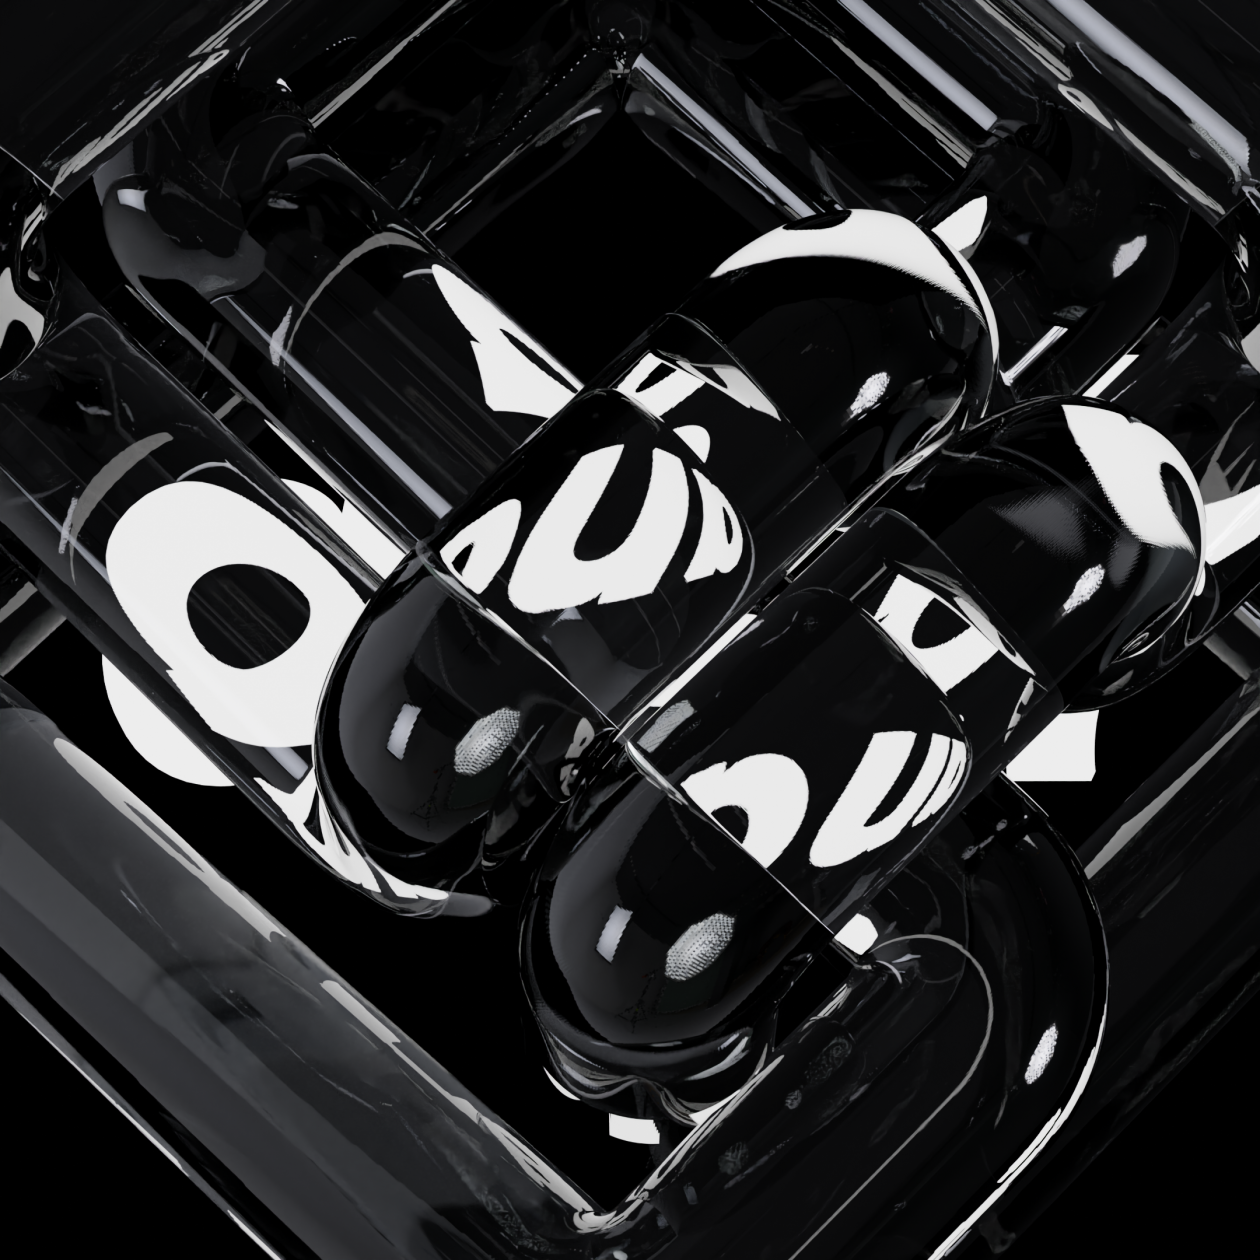 Black & White - 3D Type Experiments